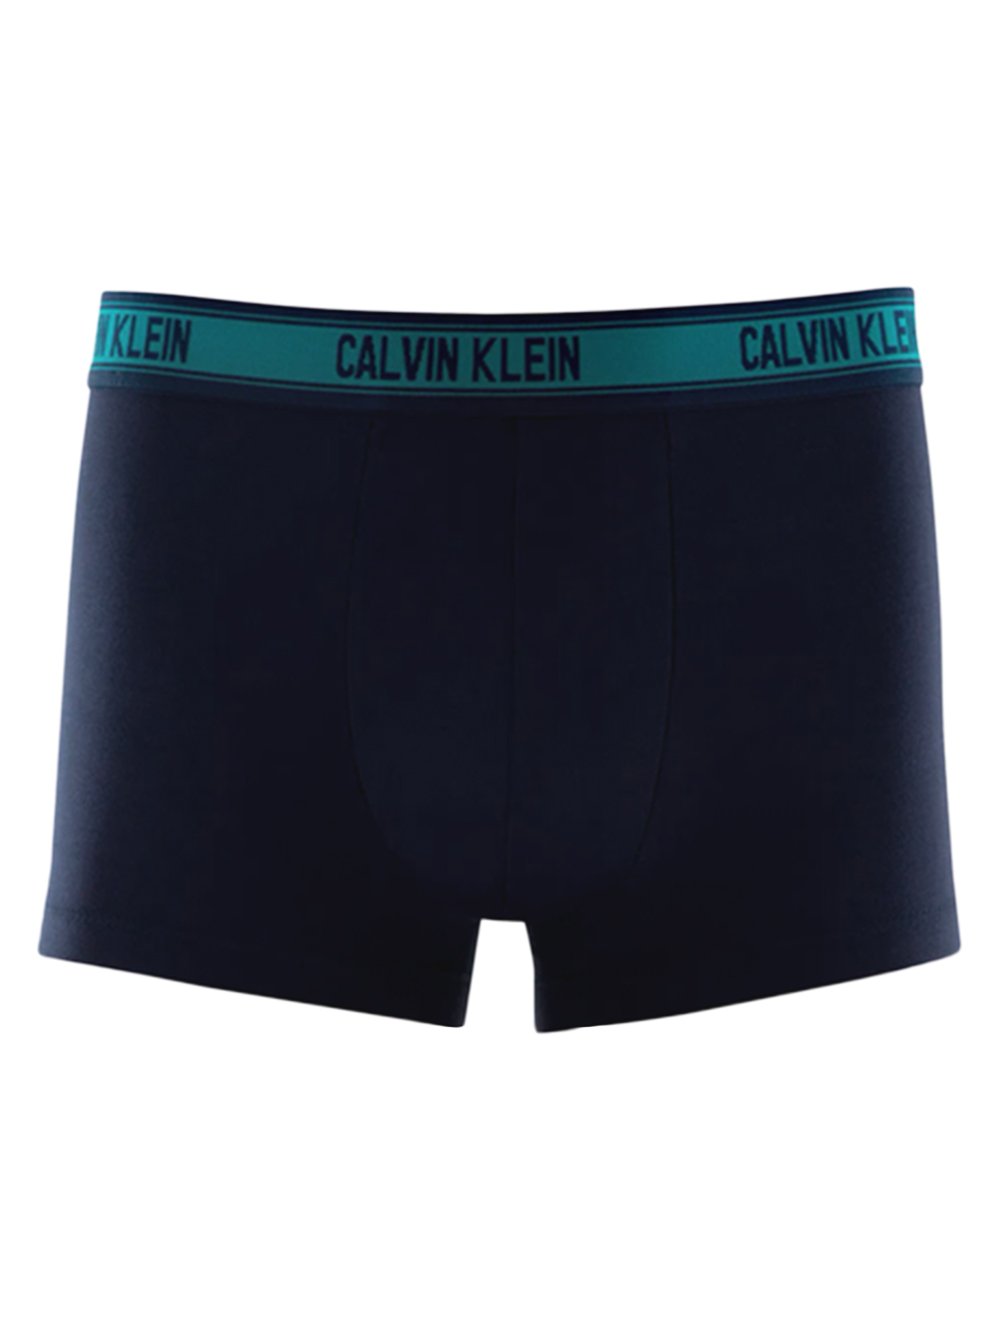 Cueca Calvin Klein Modal Trunk Cyano Stripe Azul Marinho 1UN